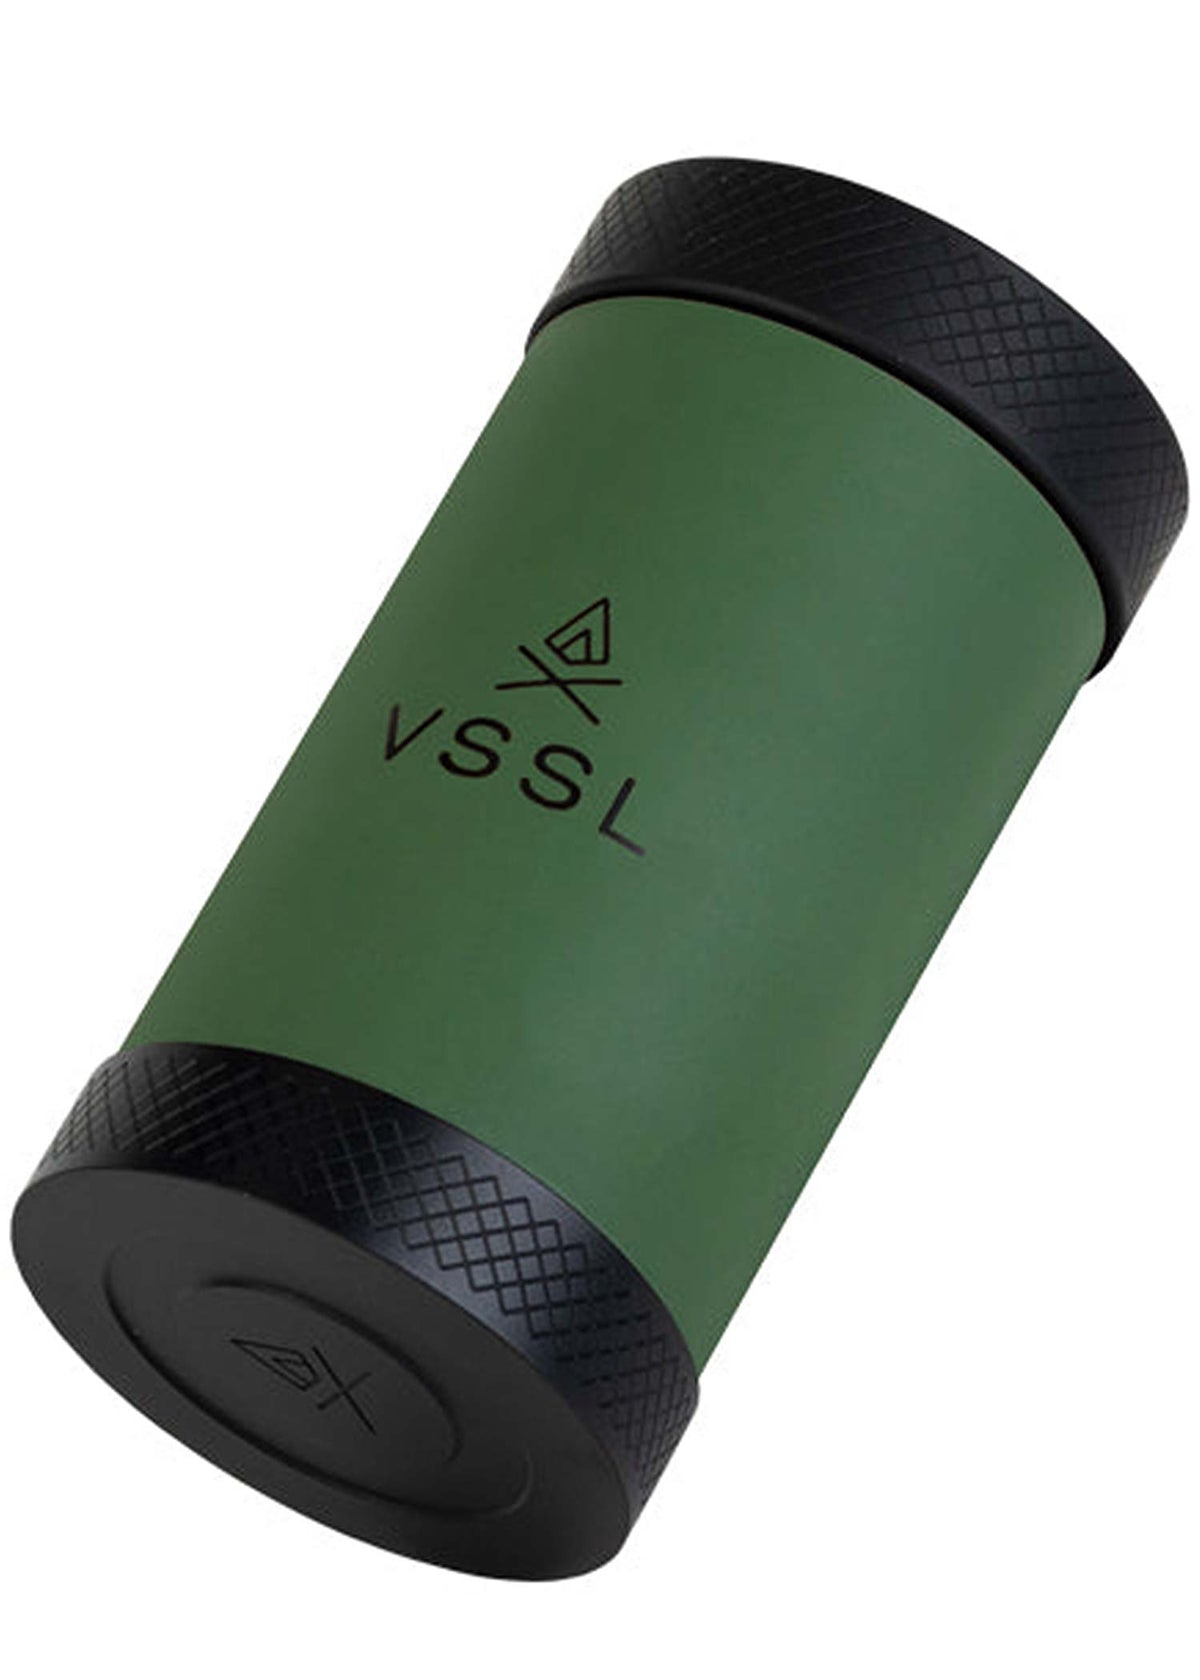 VSSL The Ready Kit Predator Green